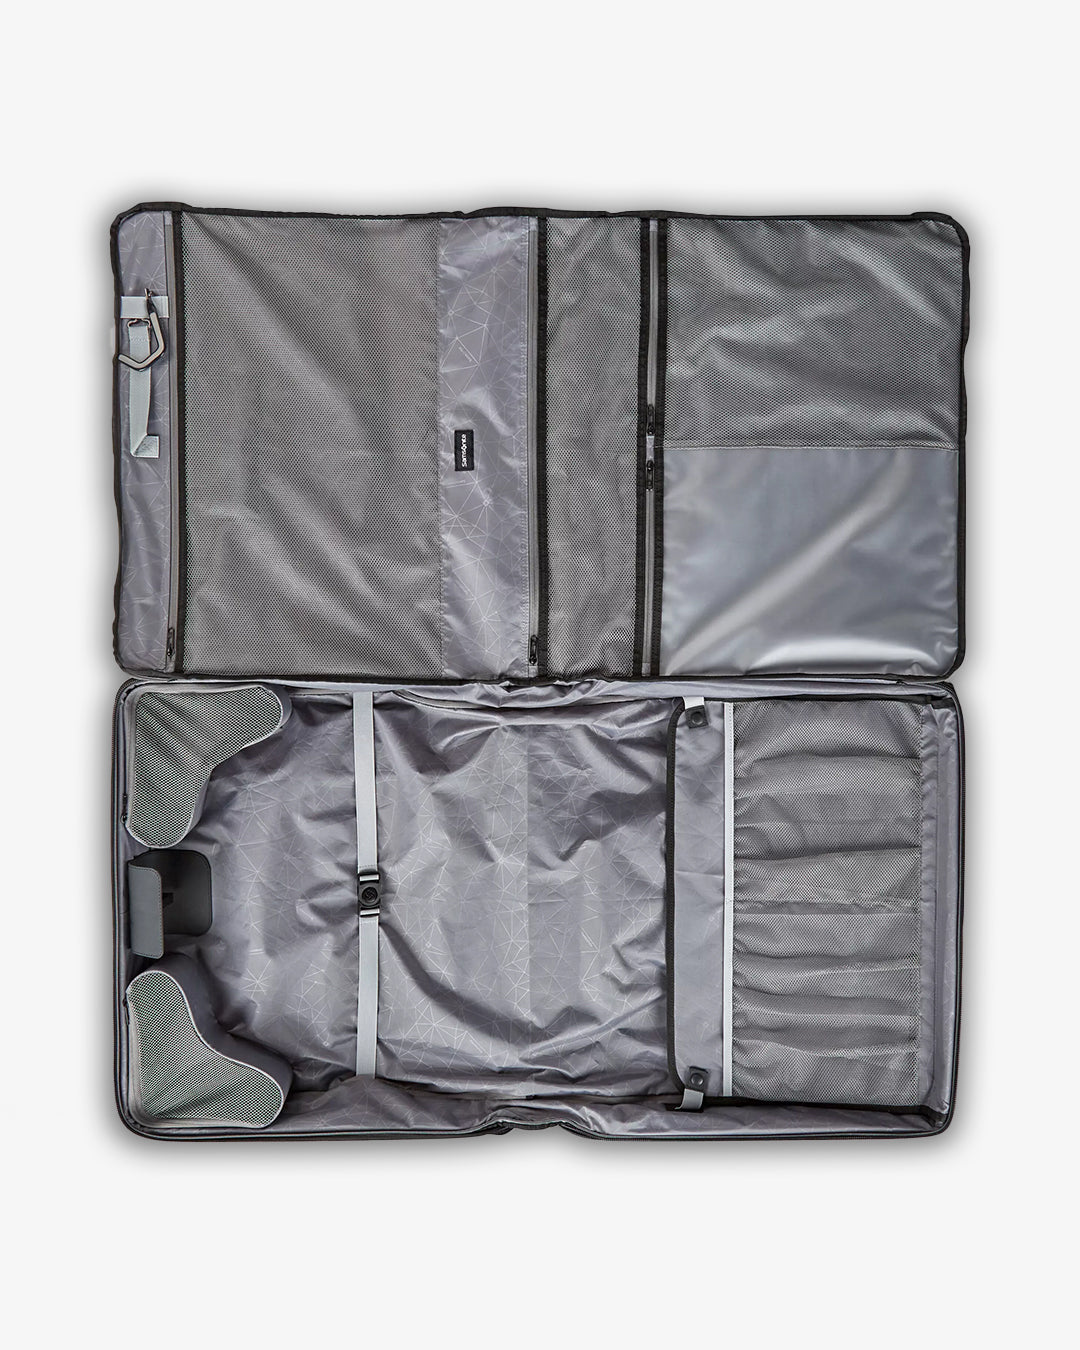 Samsonite Ascella 3.0 2 Wheel Garment Bag